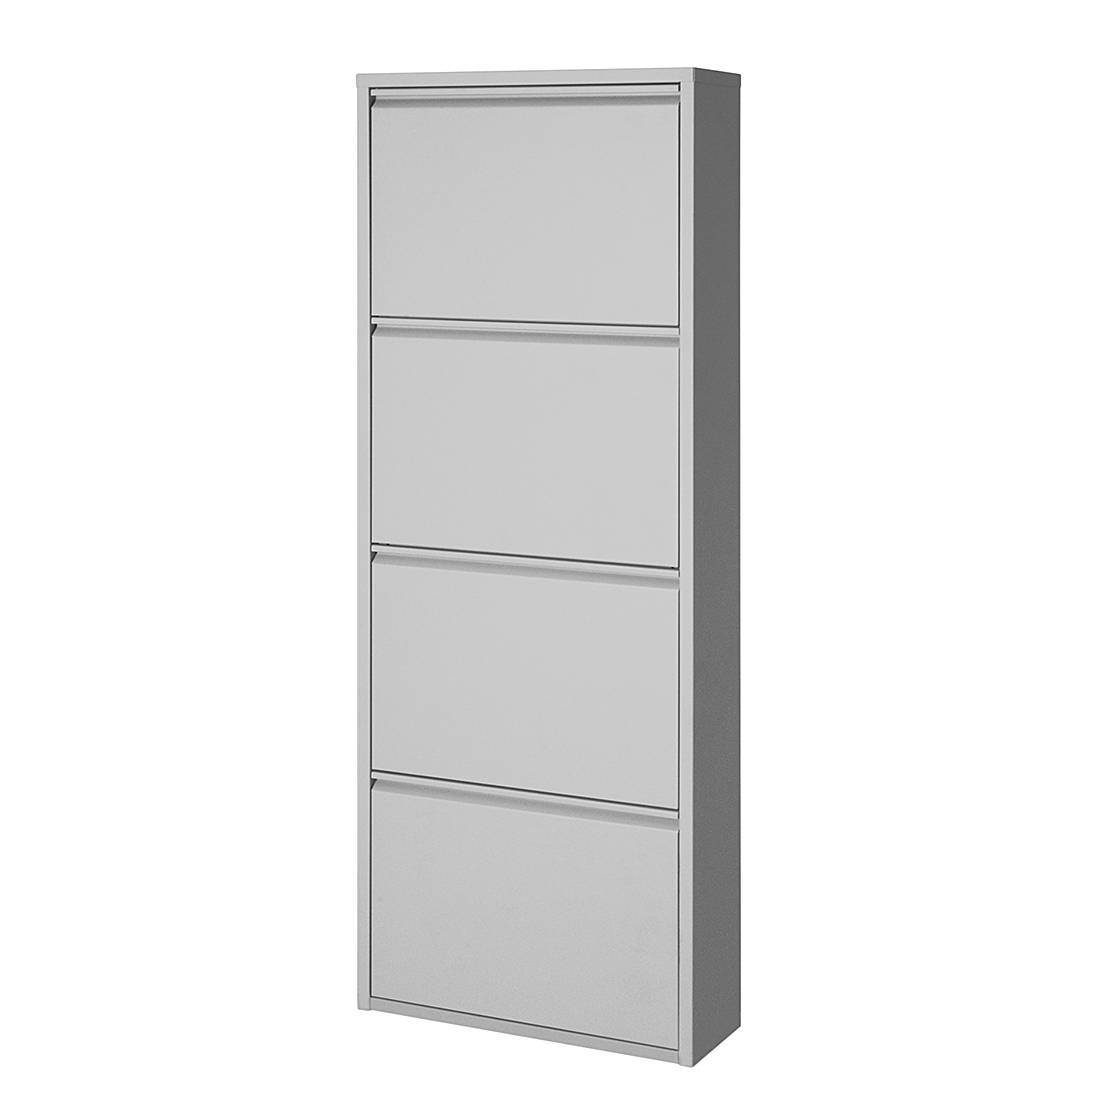 Schuhschrank Cabinet - Metall Aluminiumfarben - 4 Klappen, loftscape